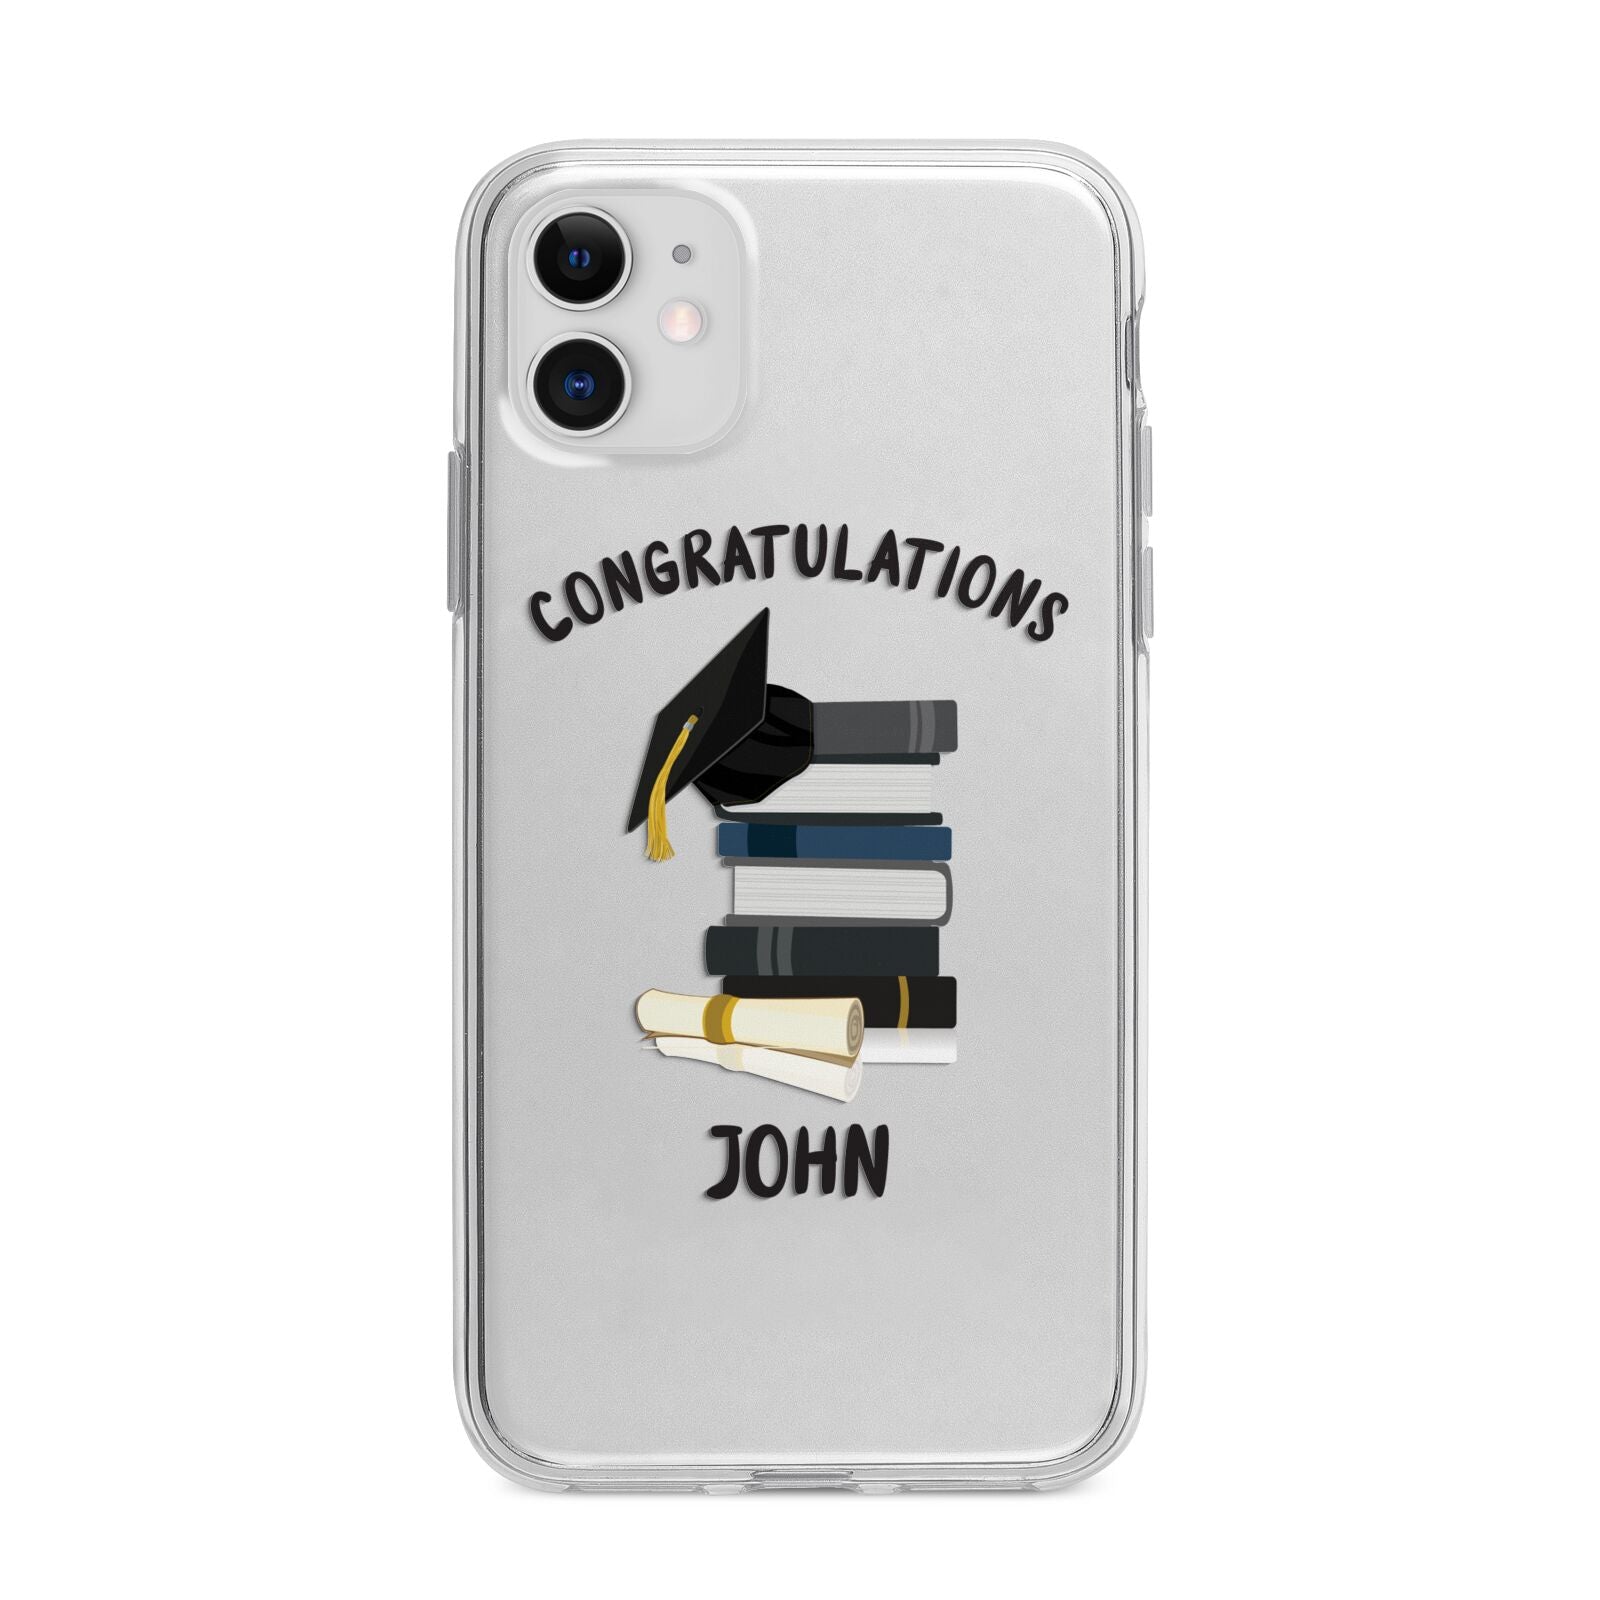 Congratulations Graduate Apple iPhone 11 in White with Bumper Case